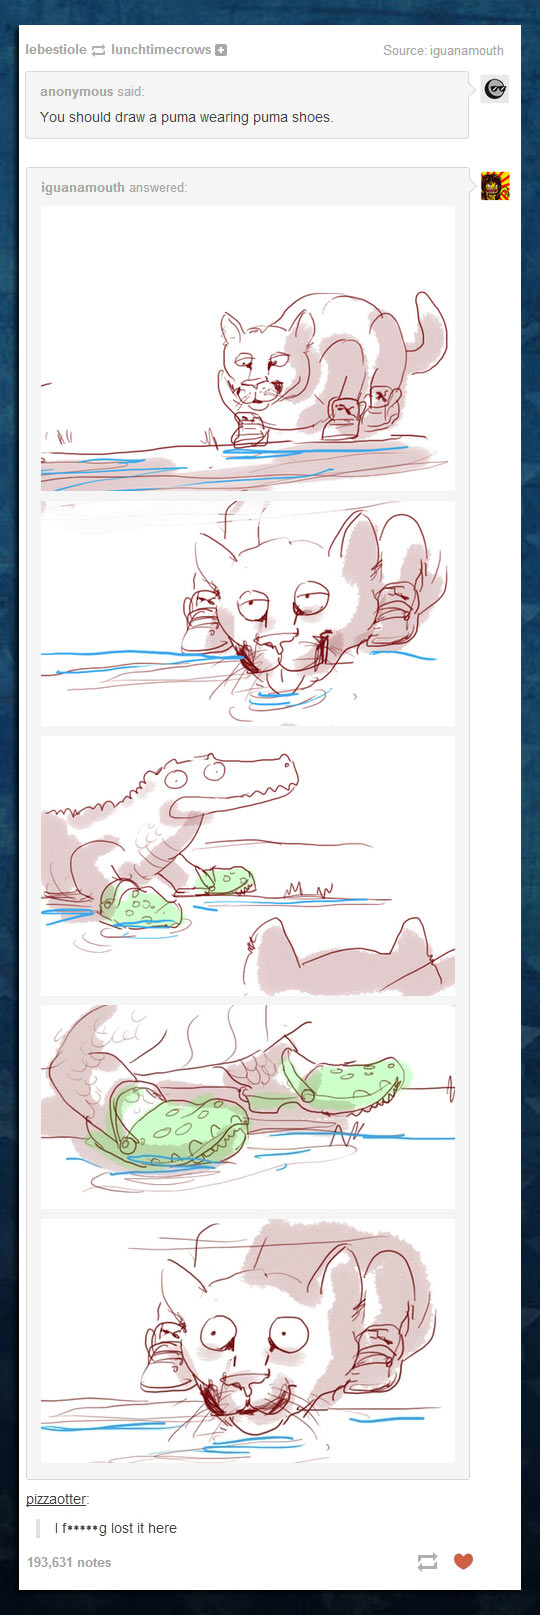 funny-drawing-puma-wearing-crocs